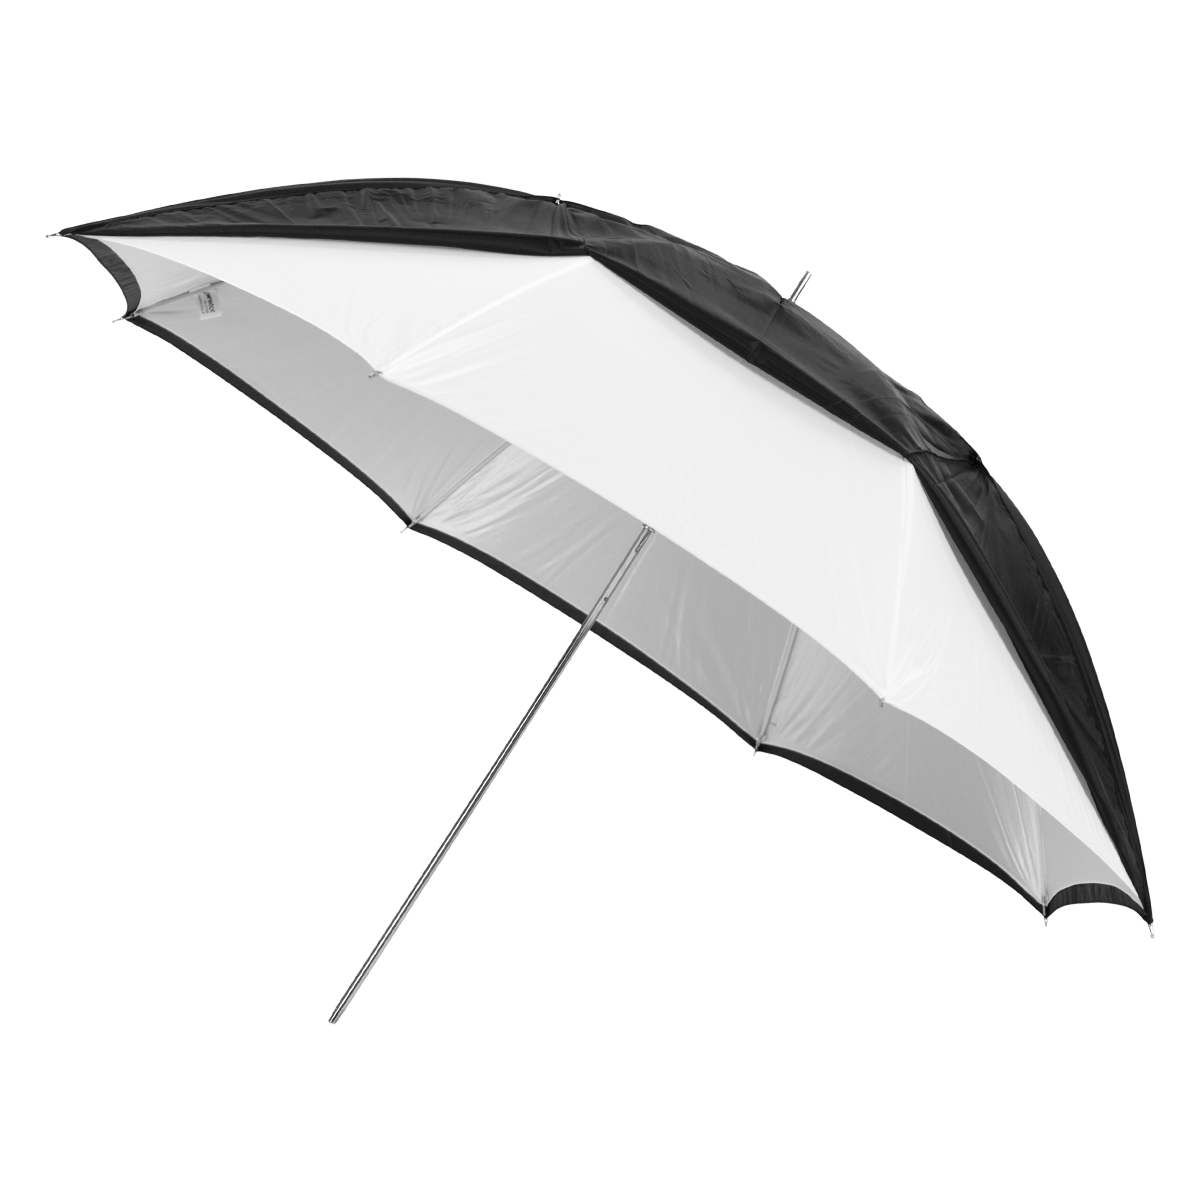 Diffusion and Removable Cover Standard Umbrellas